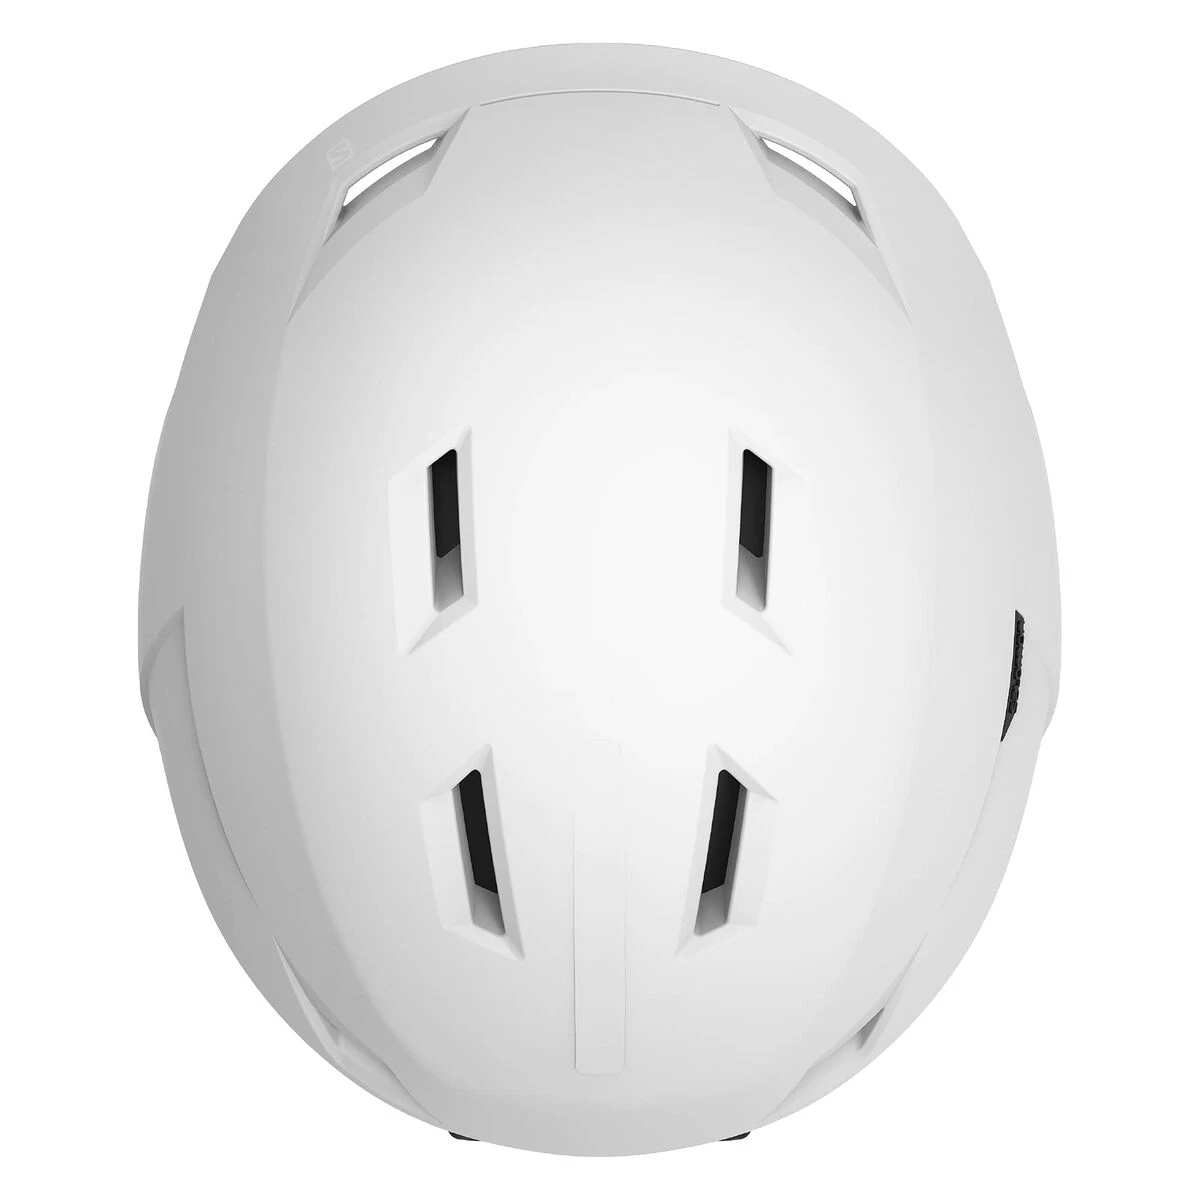 Isolated white helmet